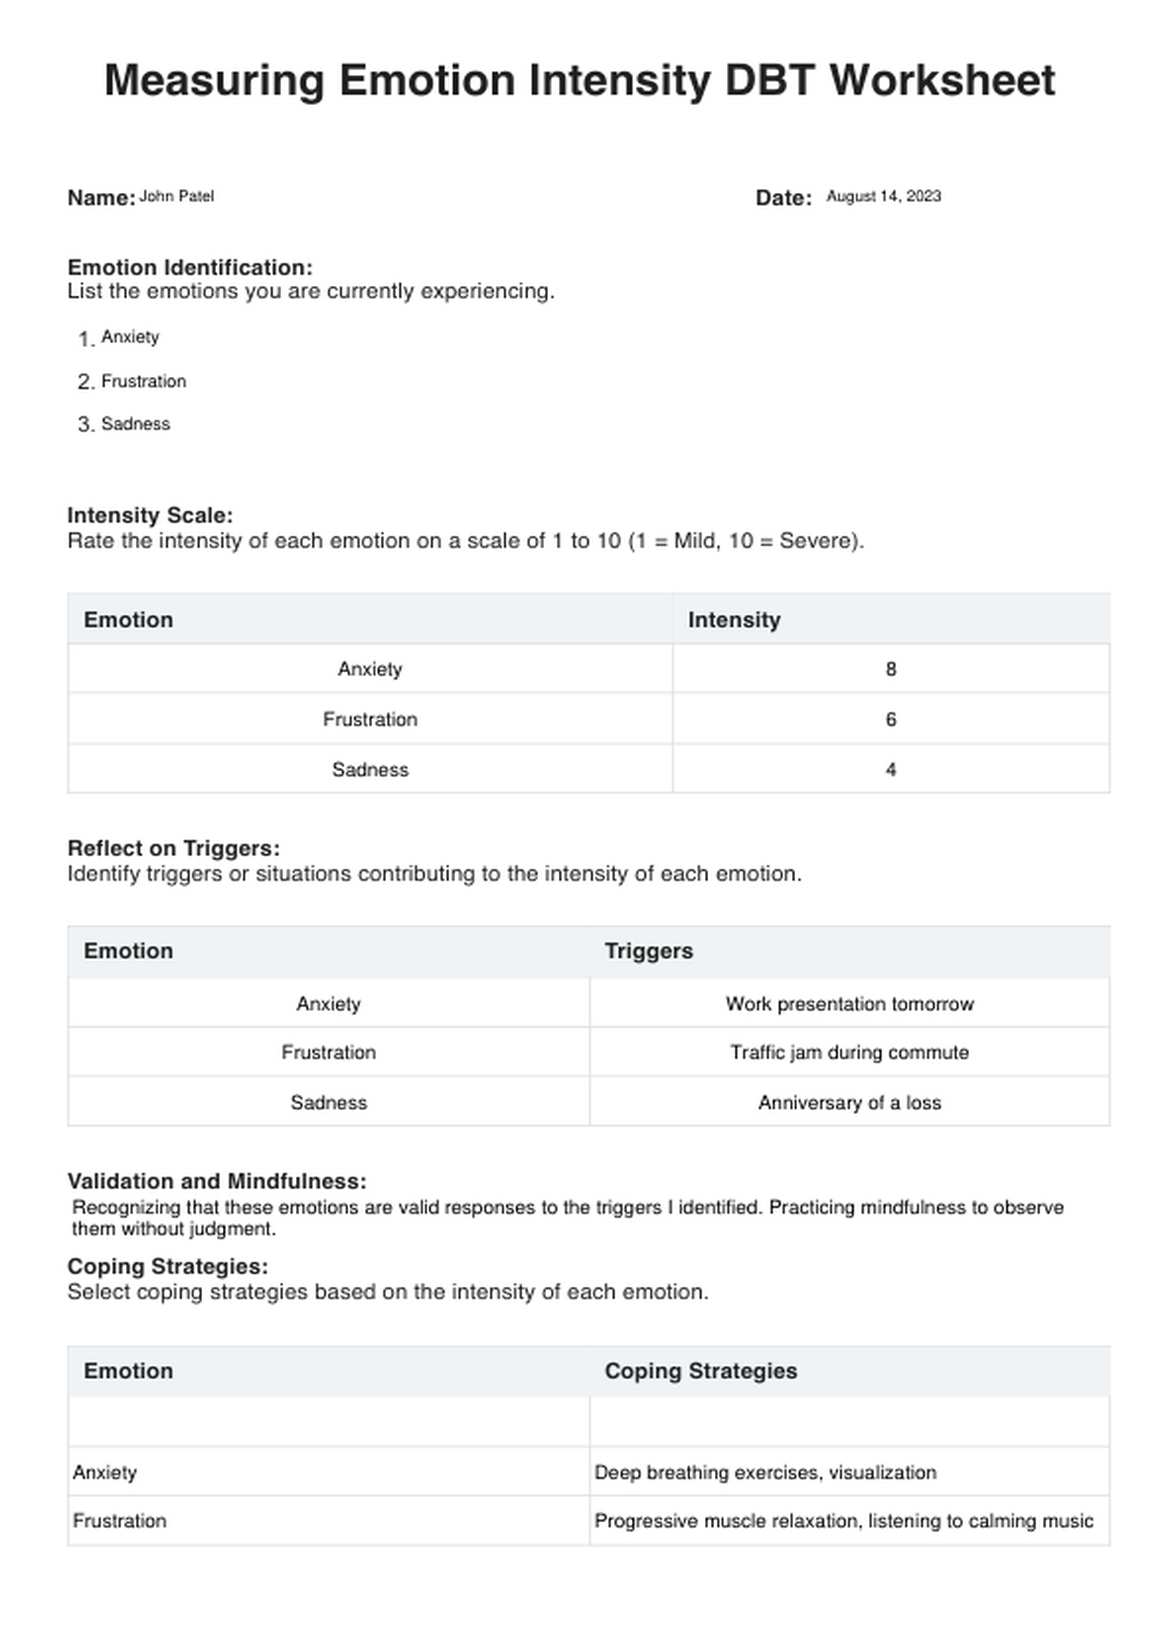 Measuring Emotion Intensity DBT Worksheet PDF Example